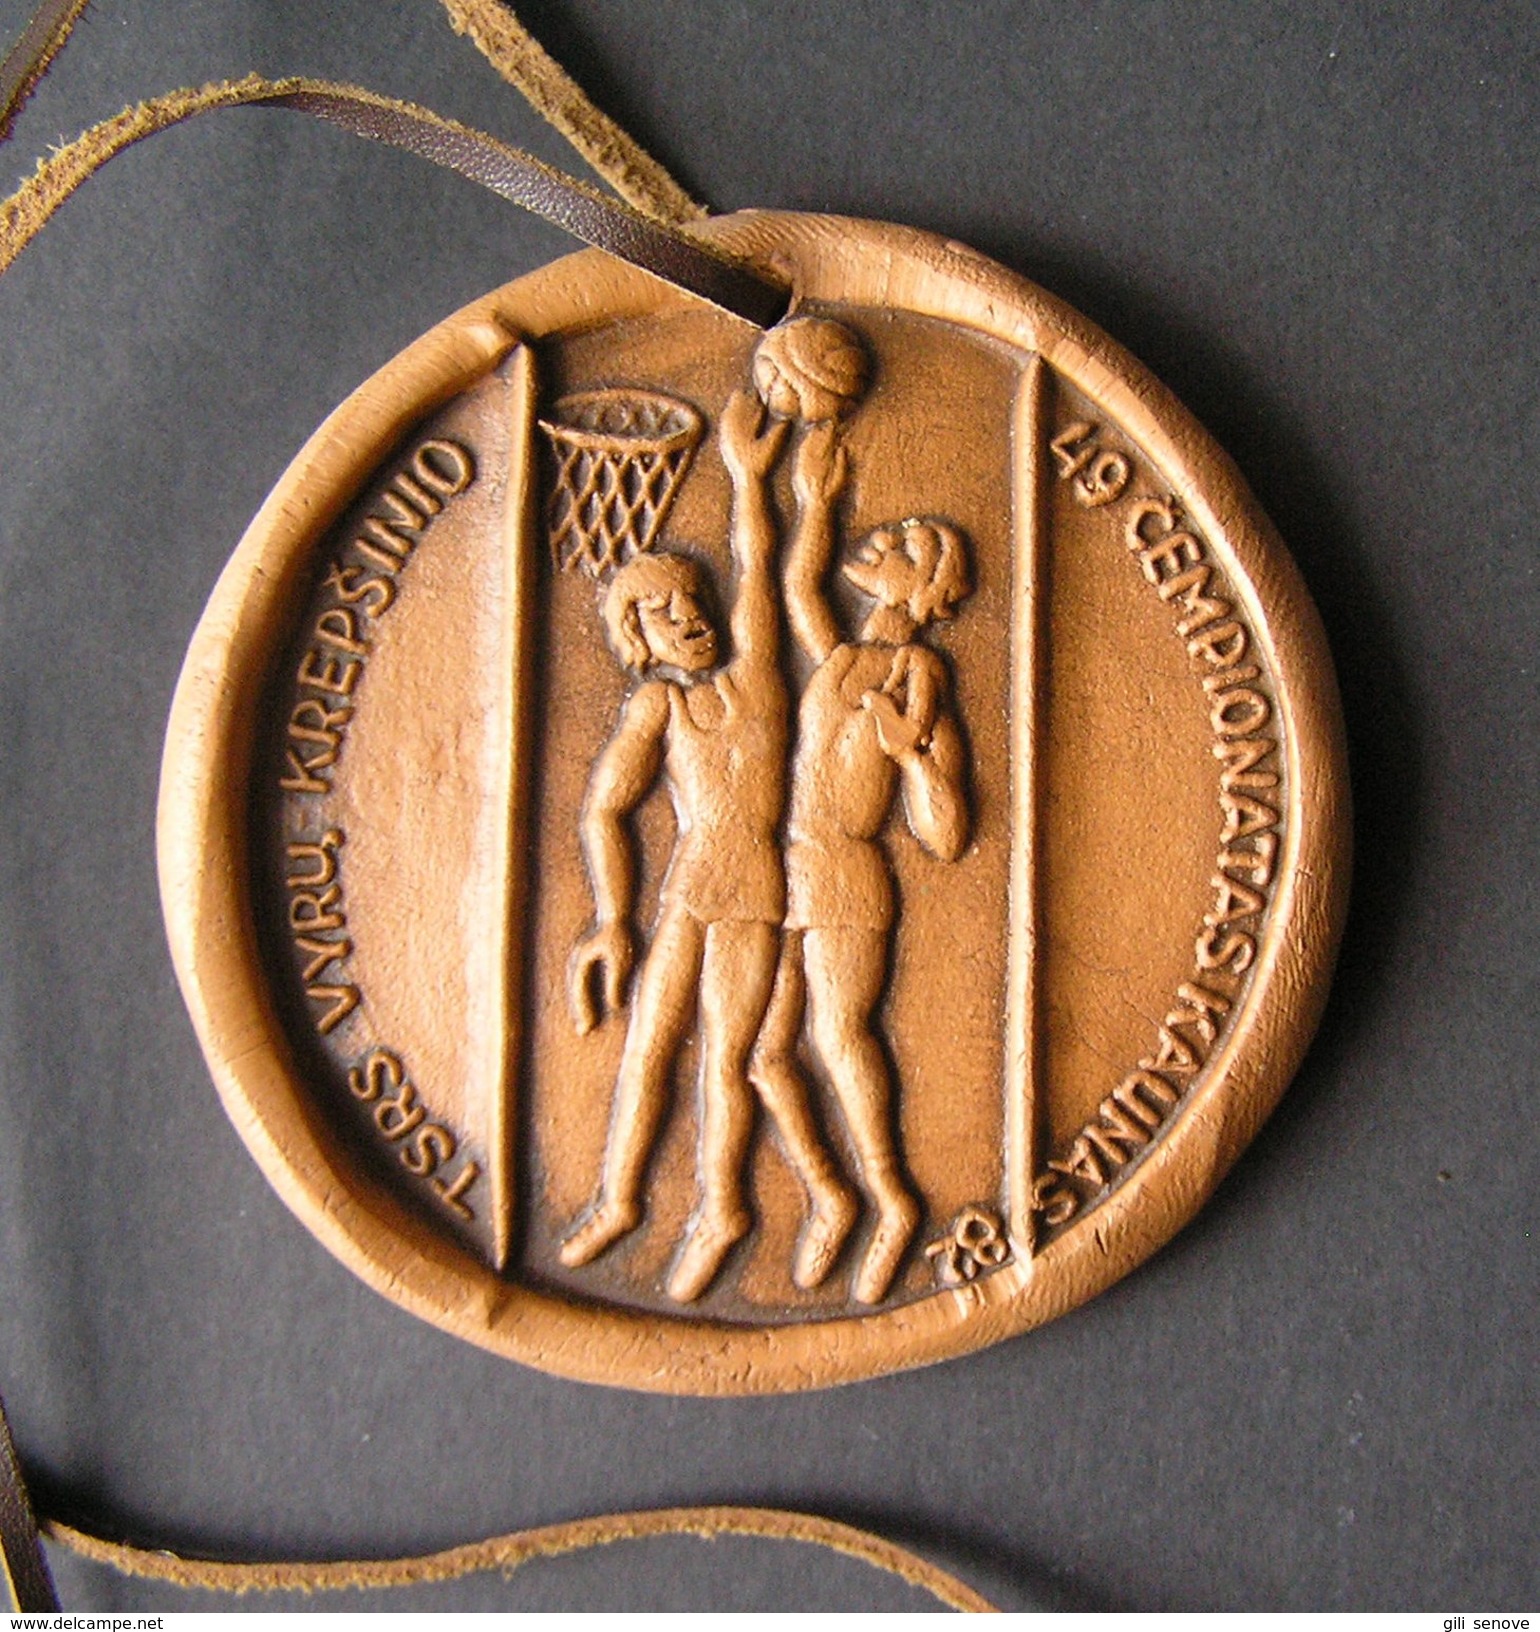 1982 Soviet Basketball Championship Finals Handmade Molar Medal - Apparel, Souvenirs & Other